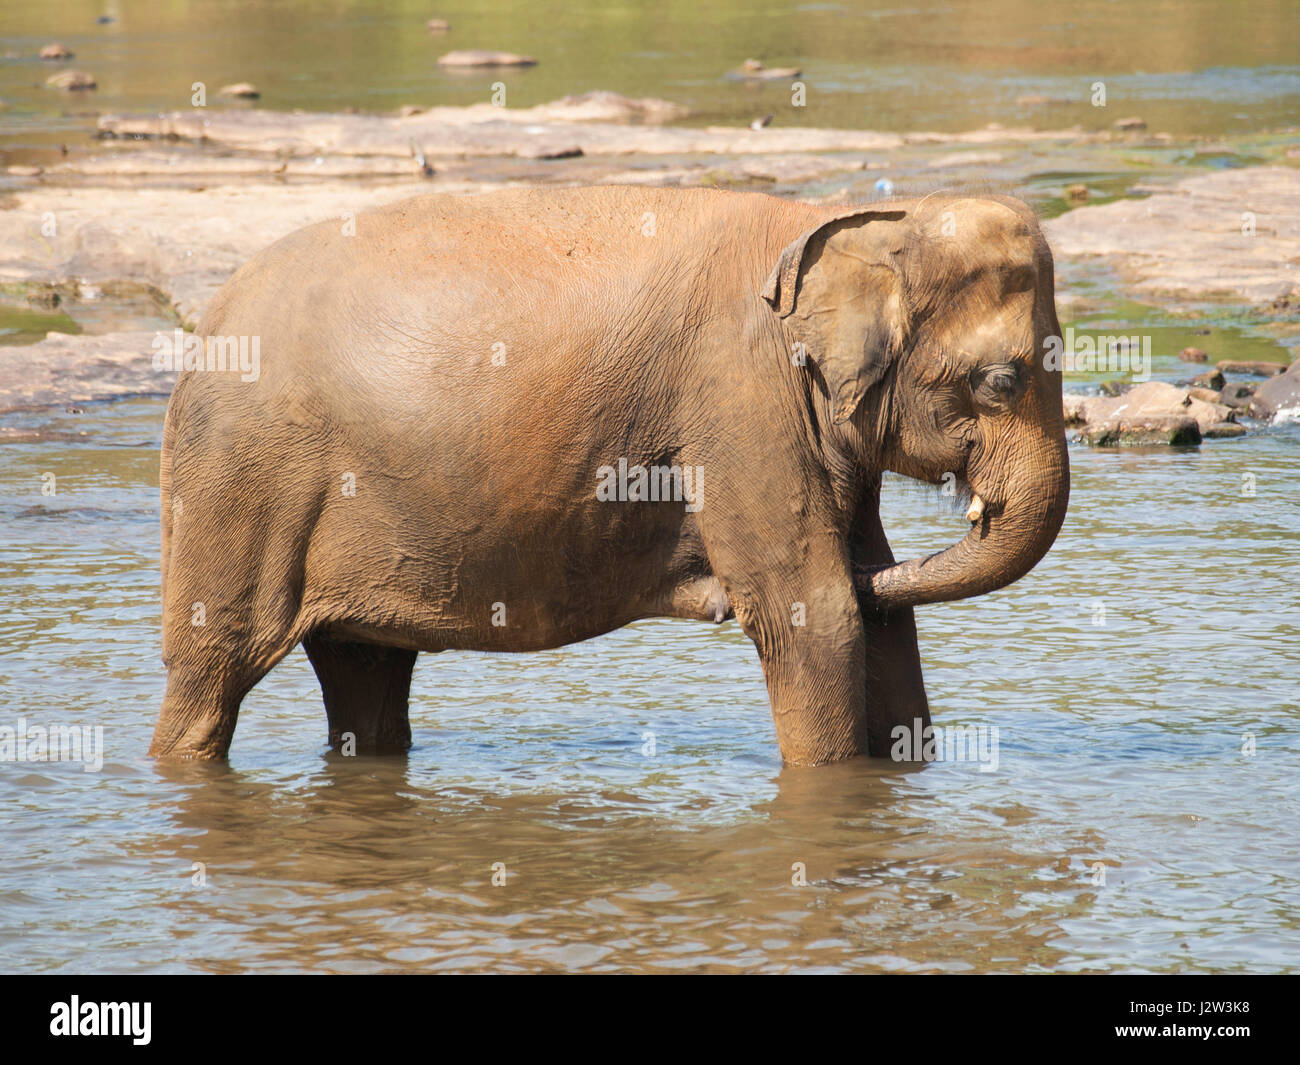 Adult asian elephants having bath in river - Elephas maximus Stock Photo